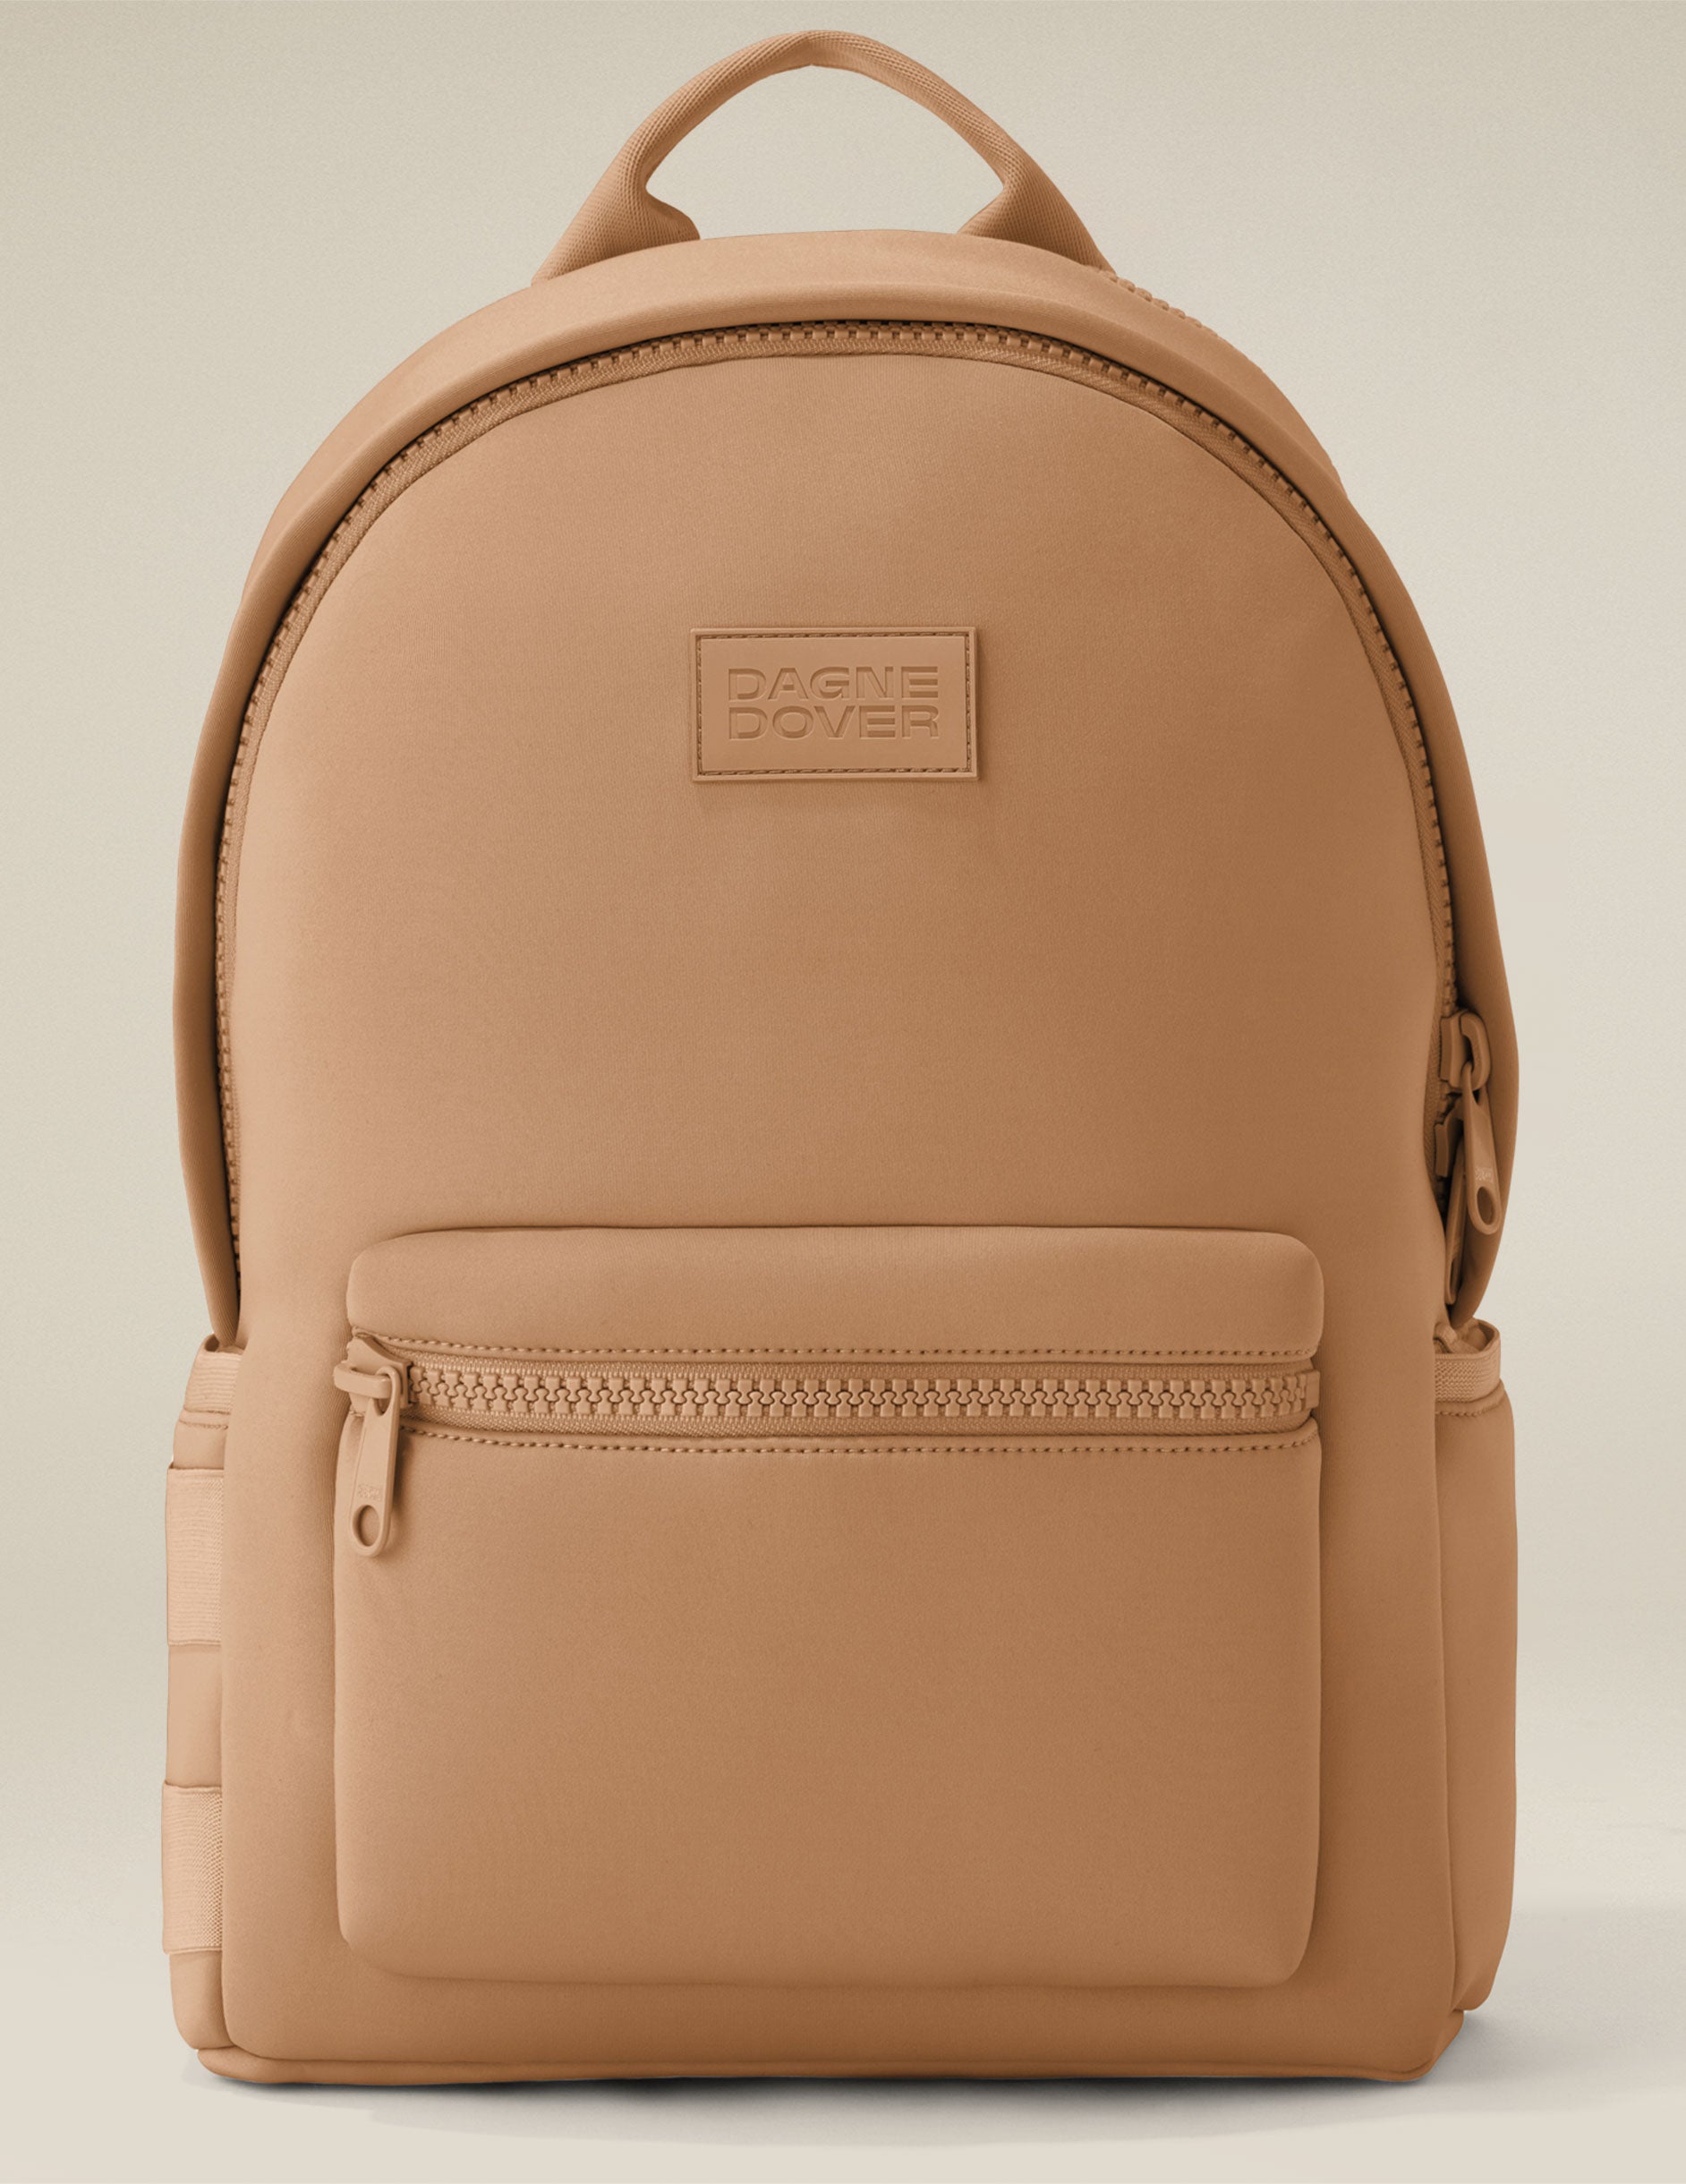 brown dagne dover backpack. 